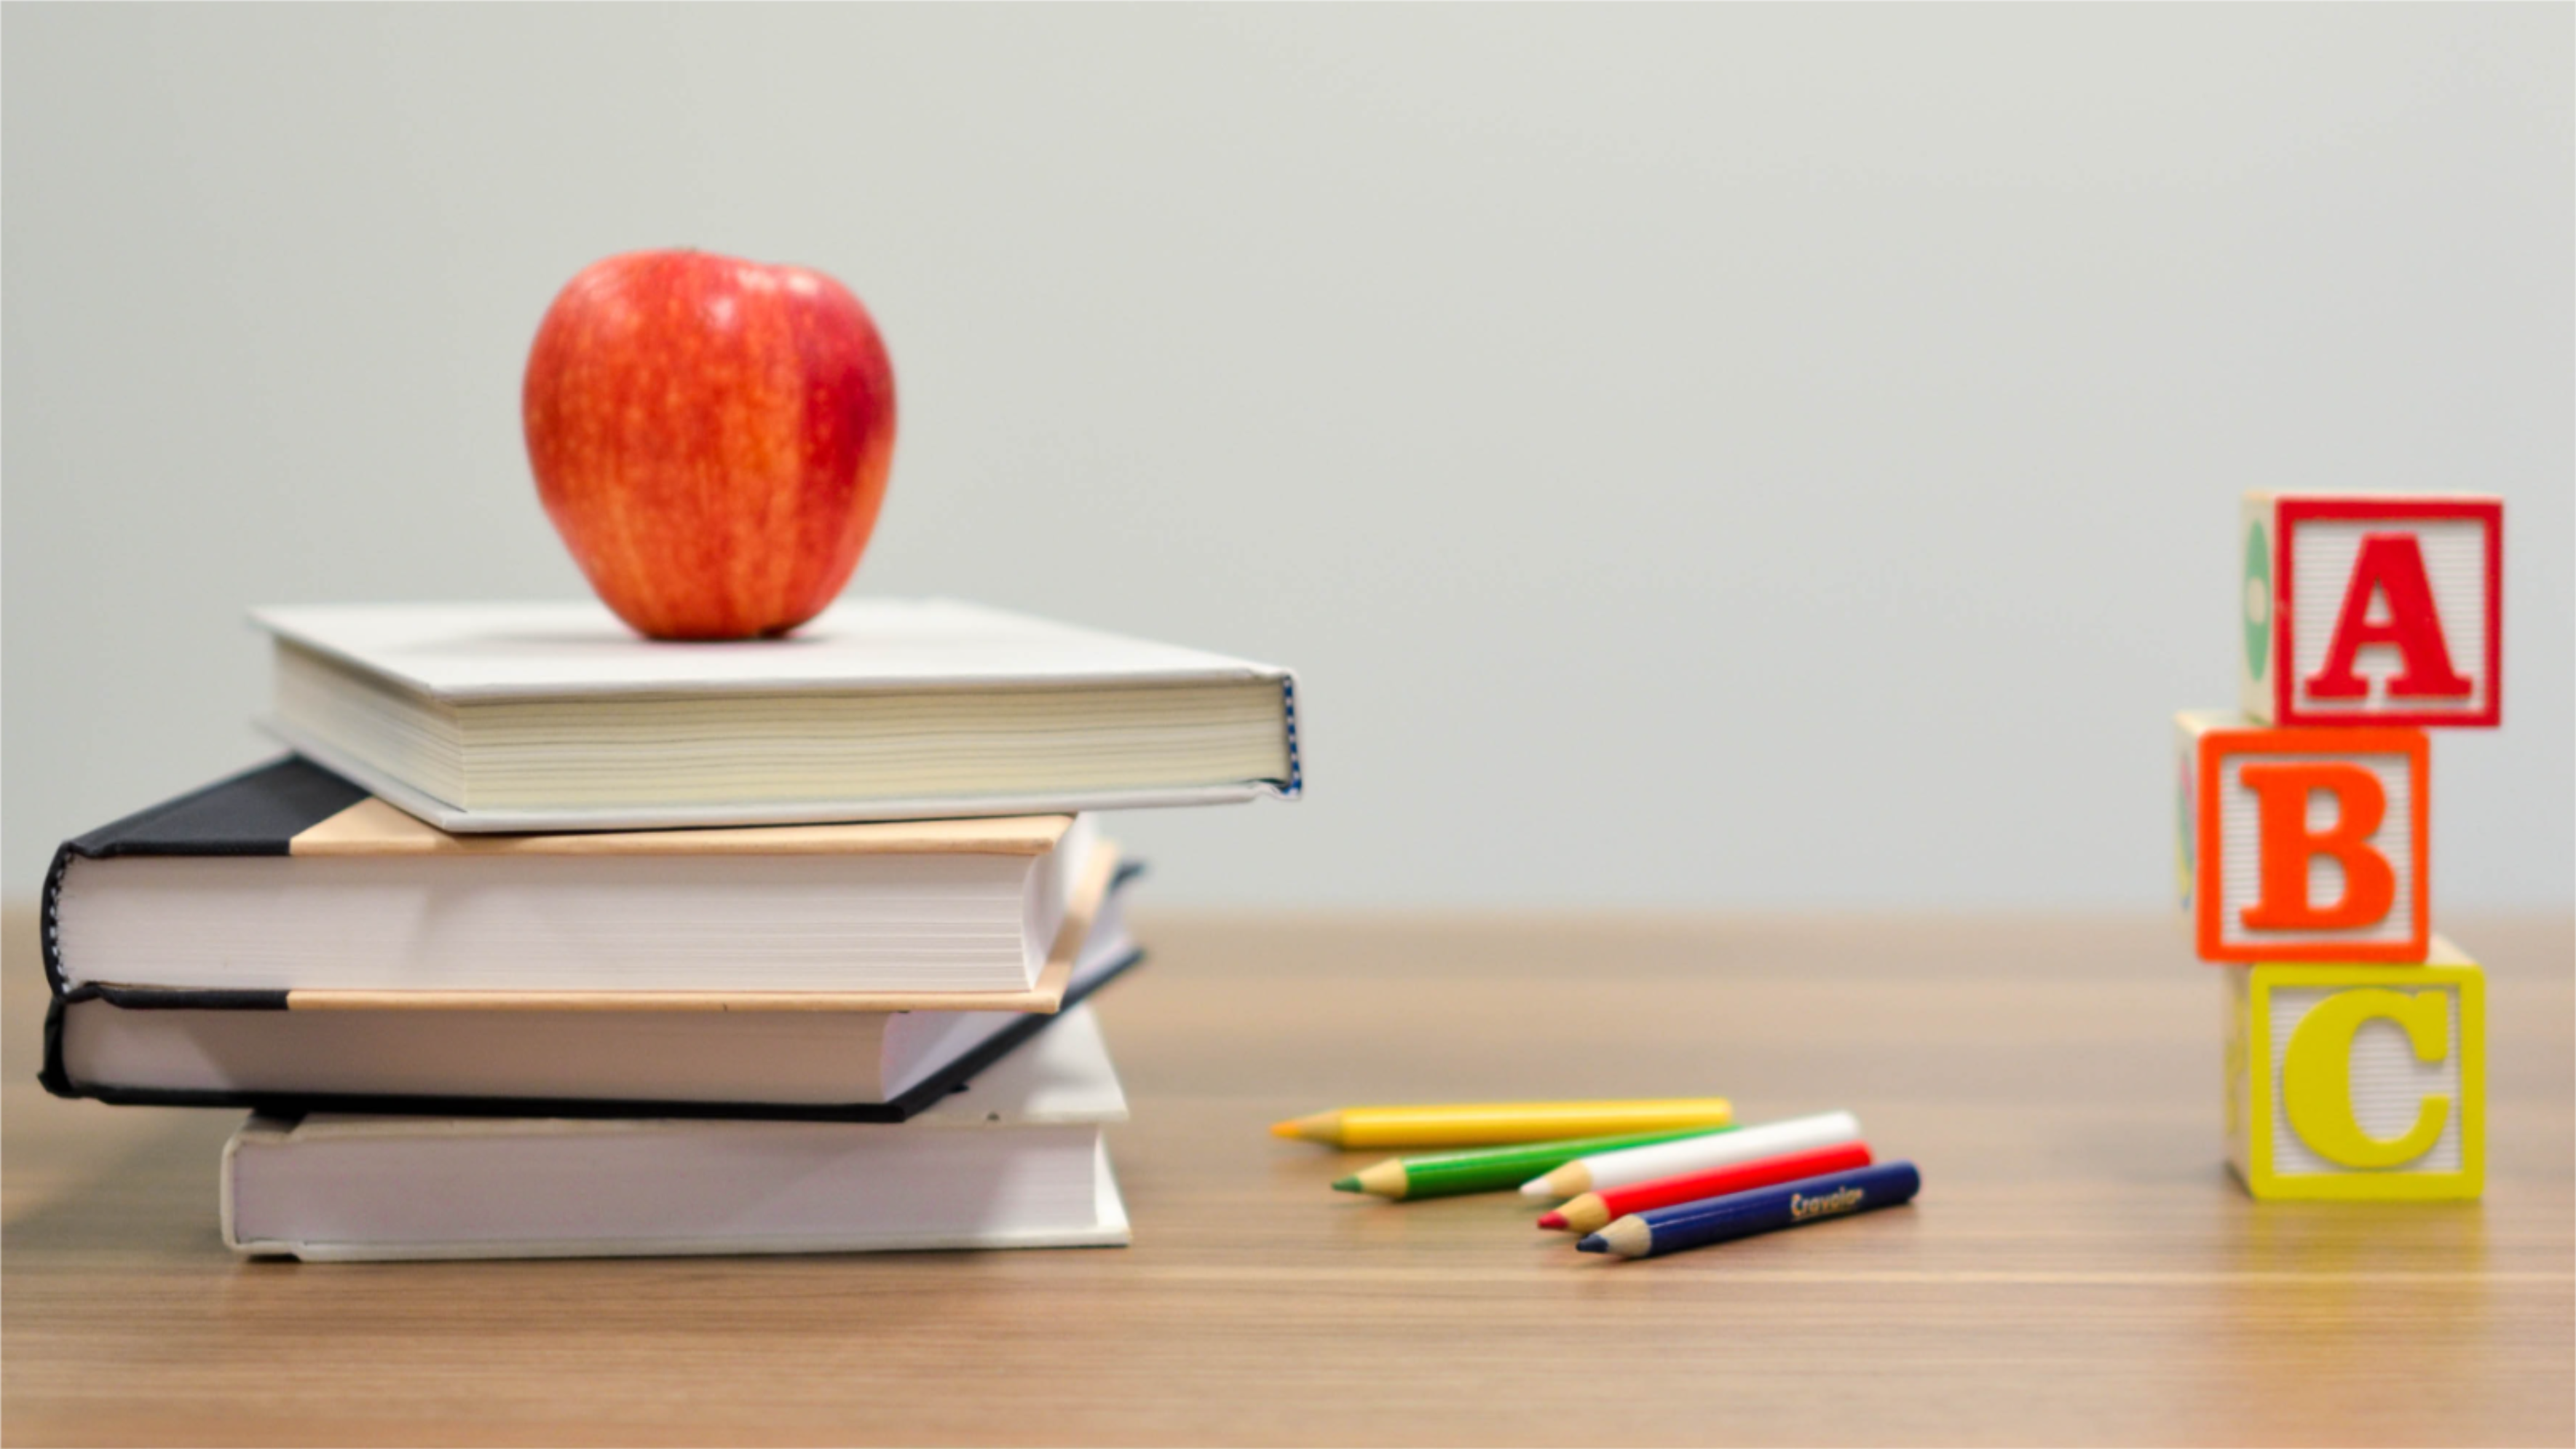 Class image, apple on books, colored pencils, ABC blocks